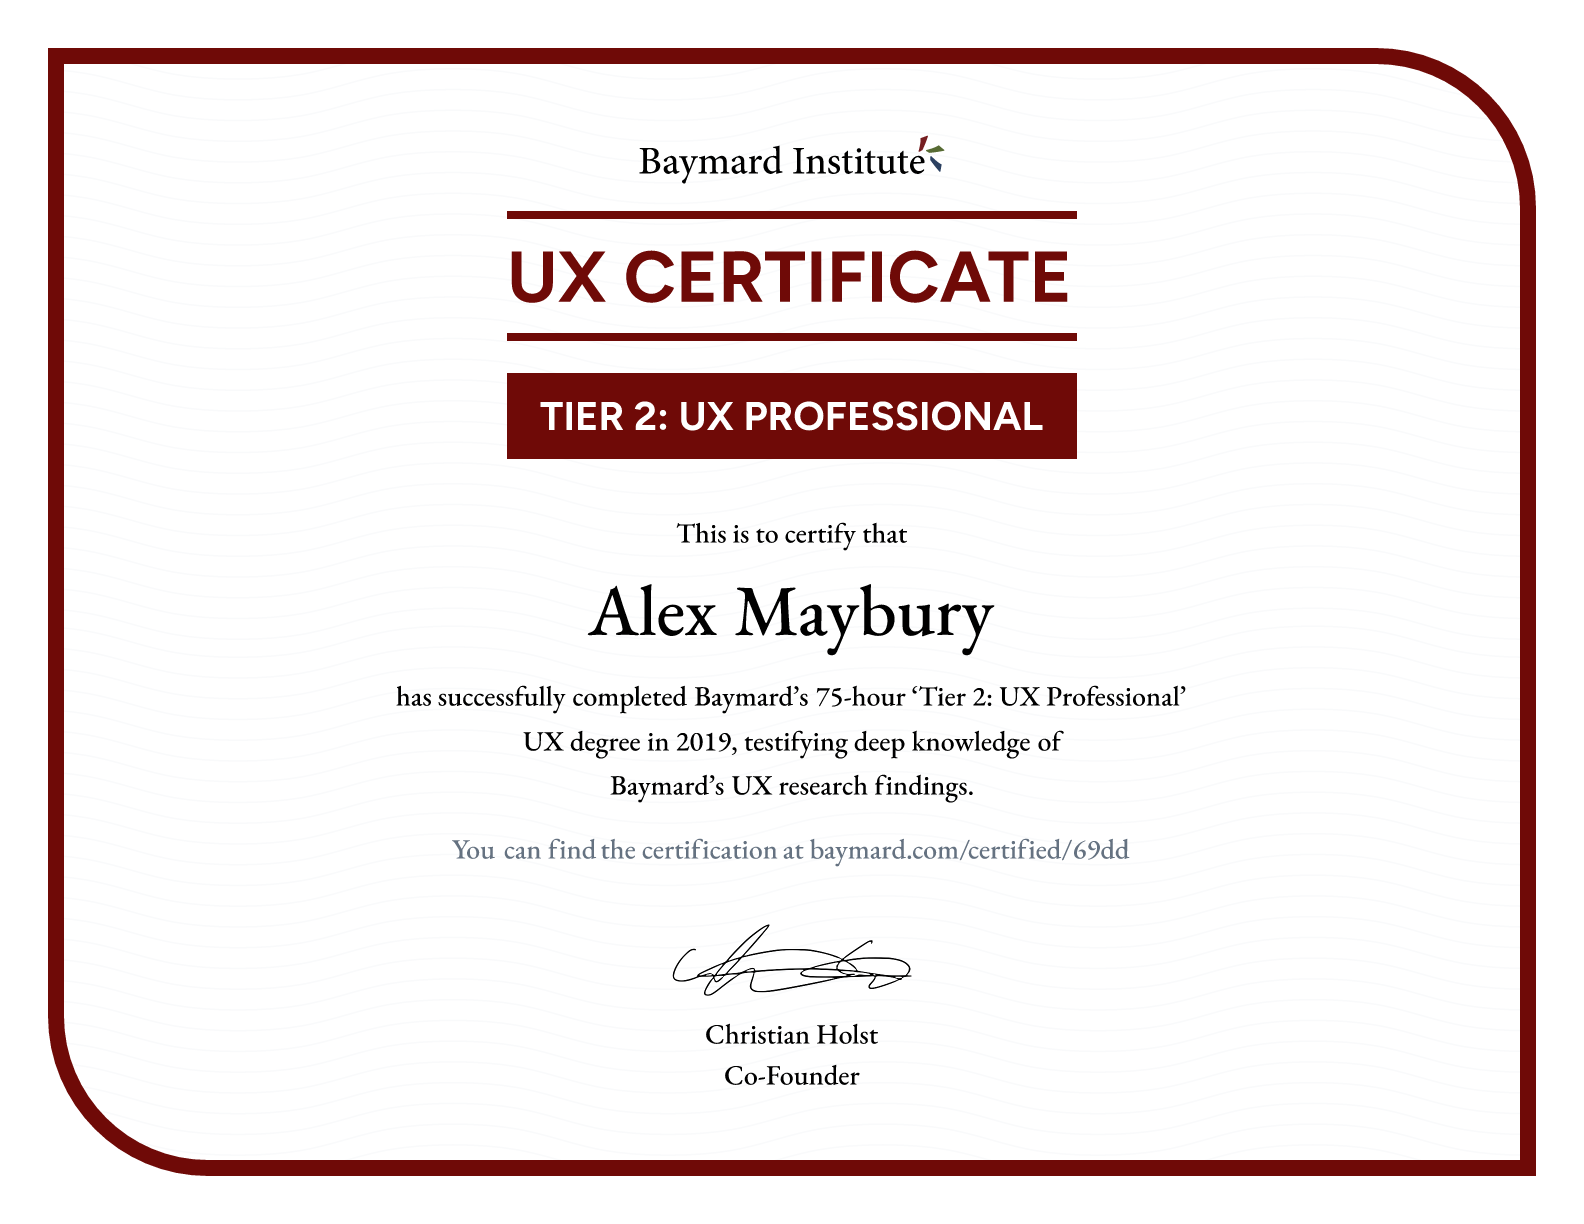 Alex Maybury’s certificate